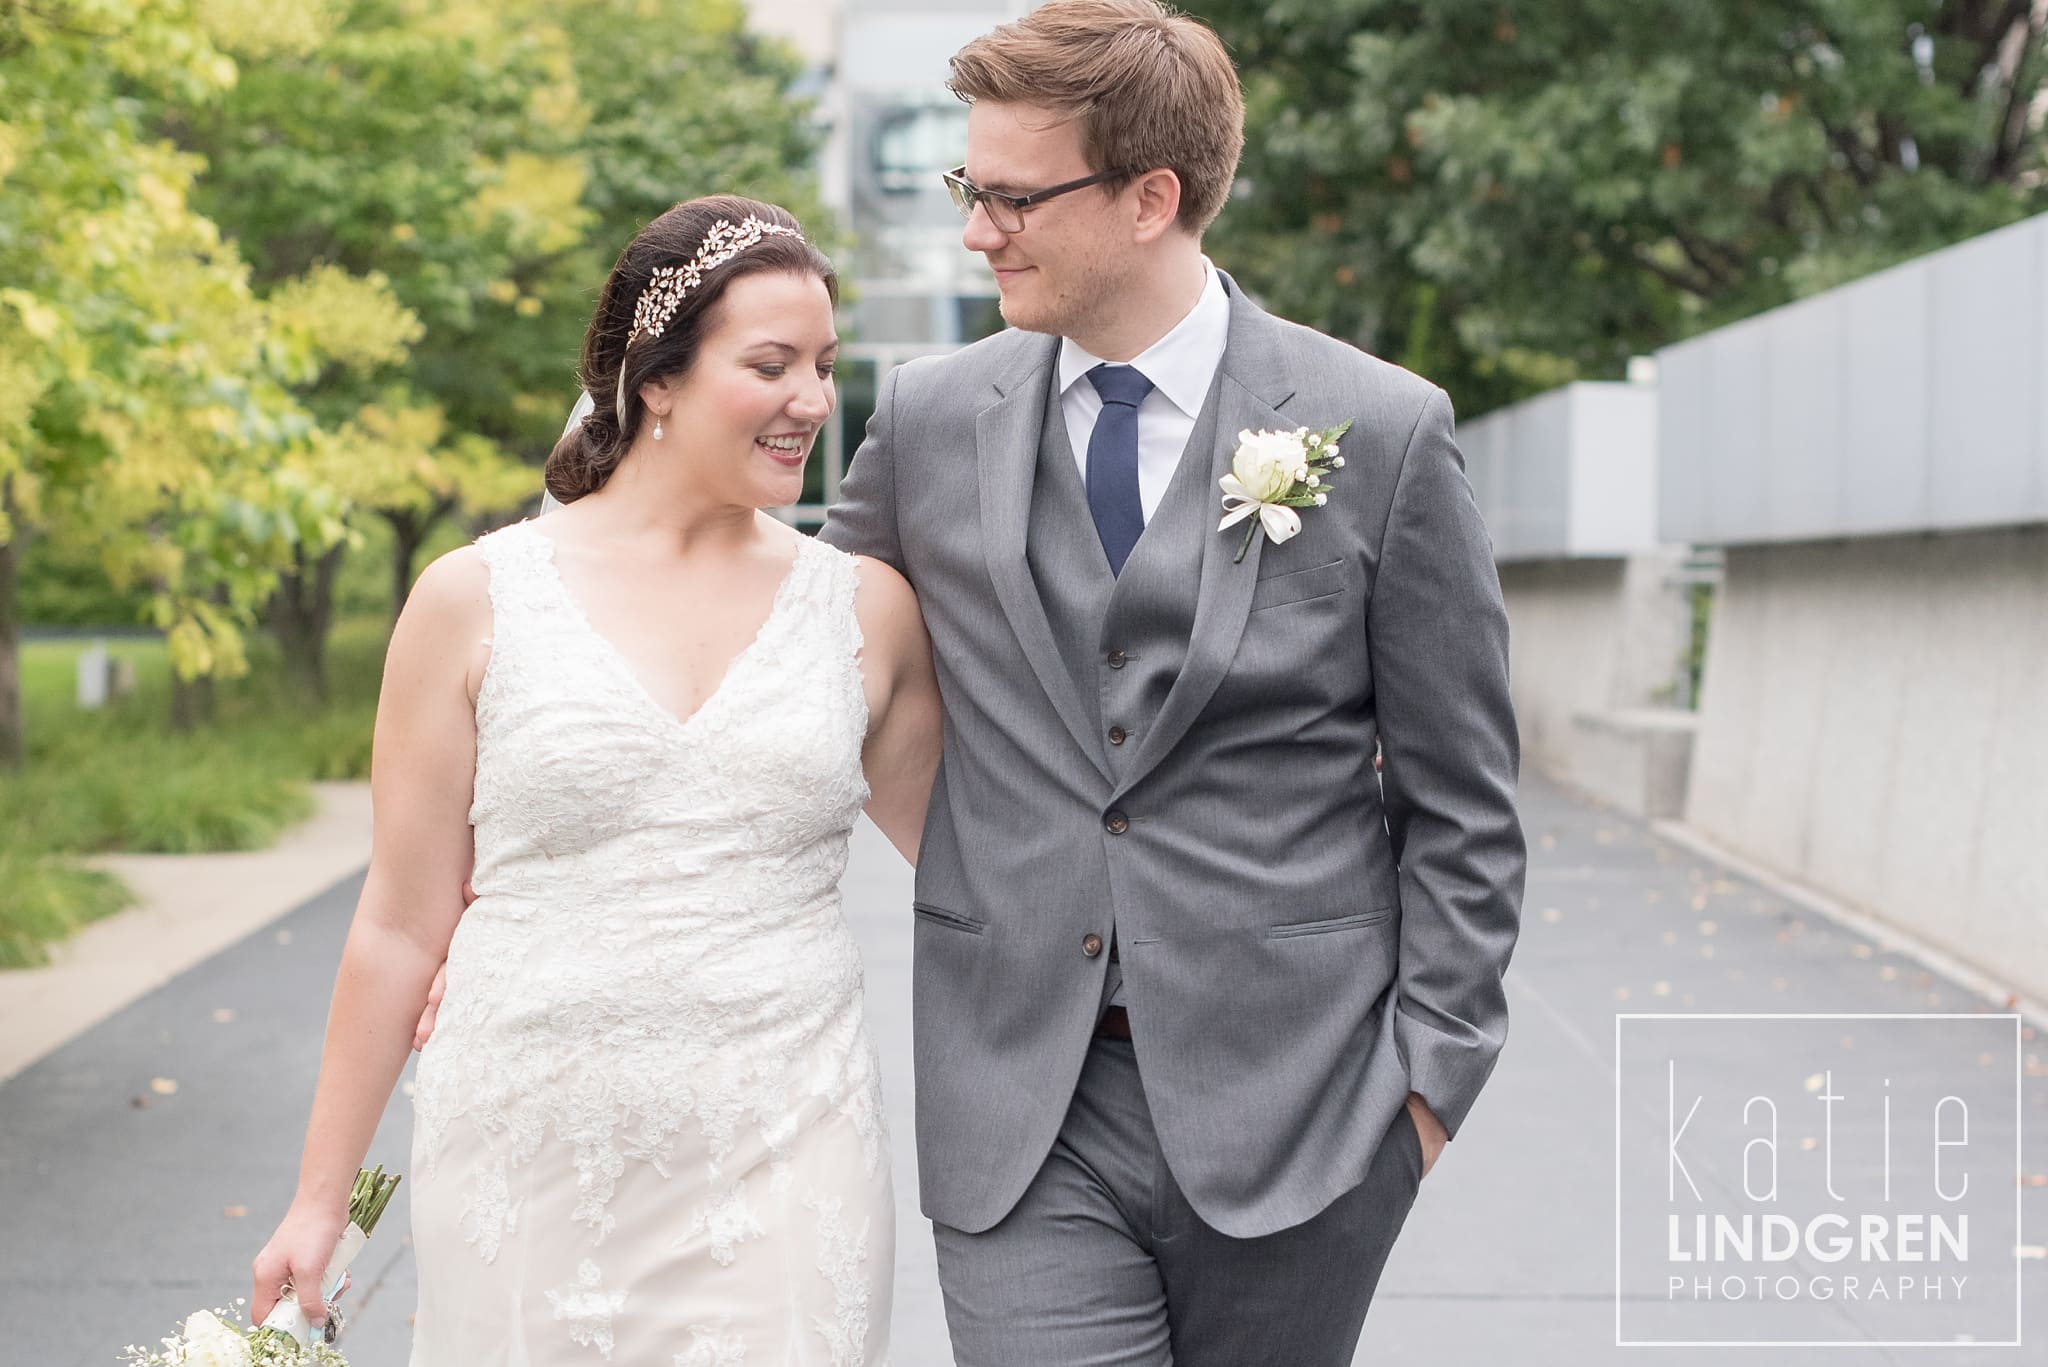 Anna & Barrett | Des Moines, Iowa Wedding Photographer